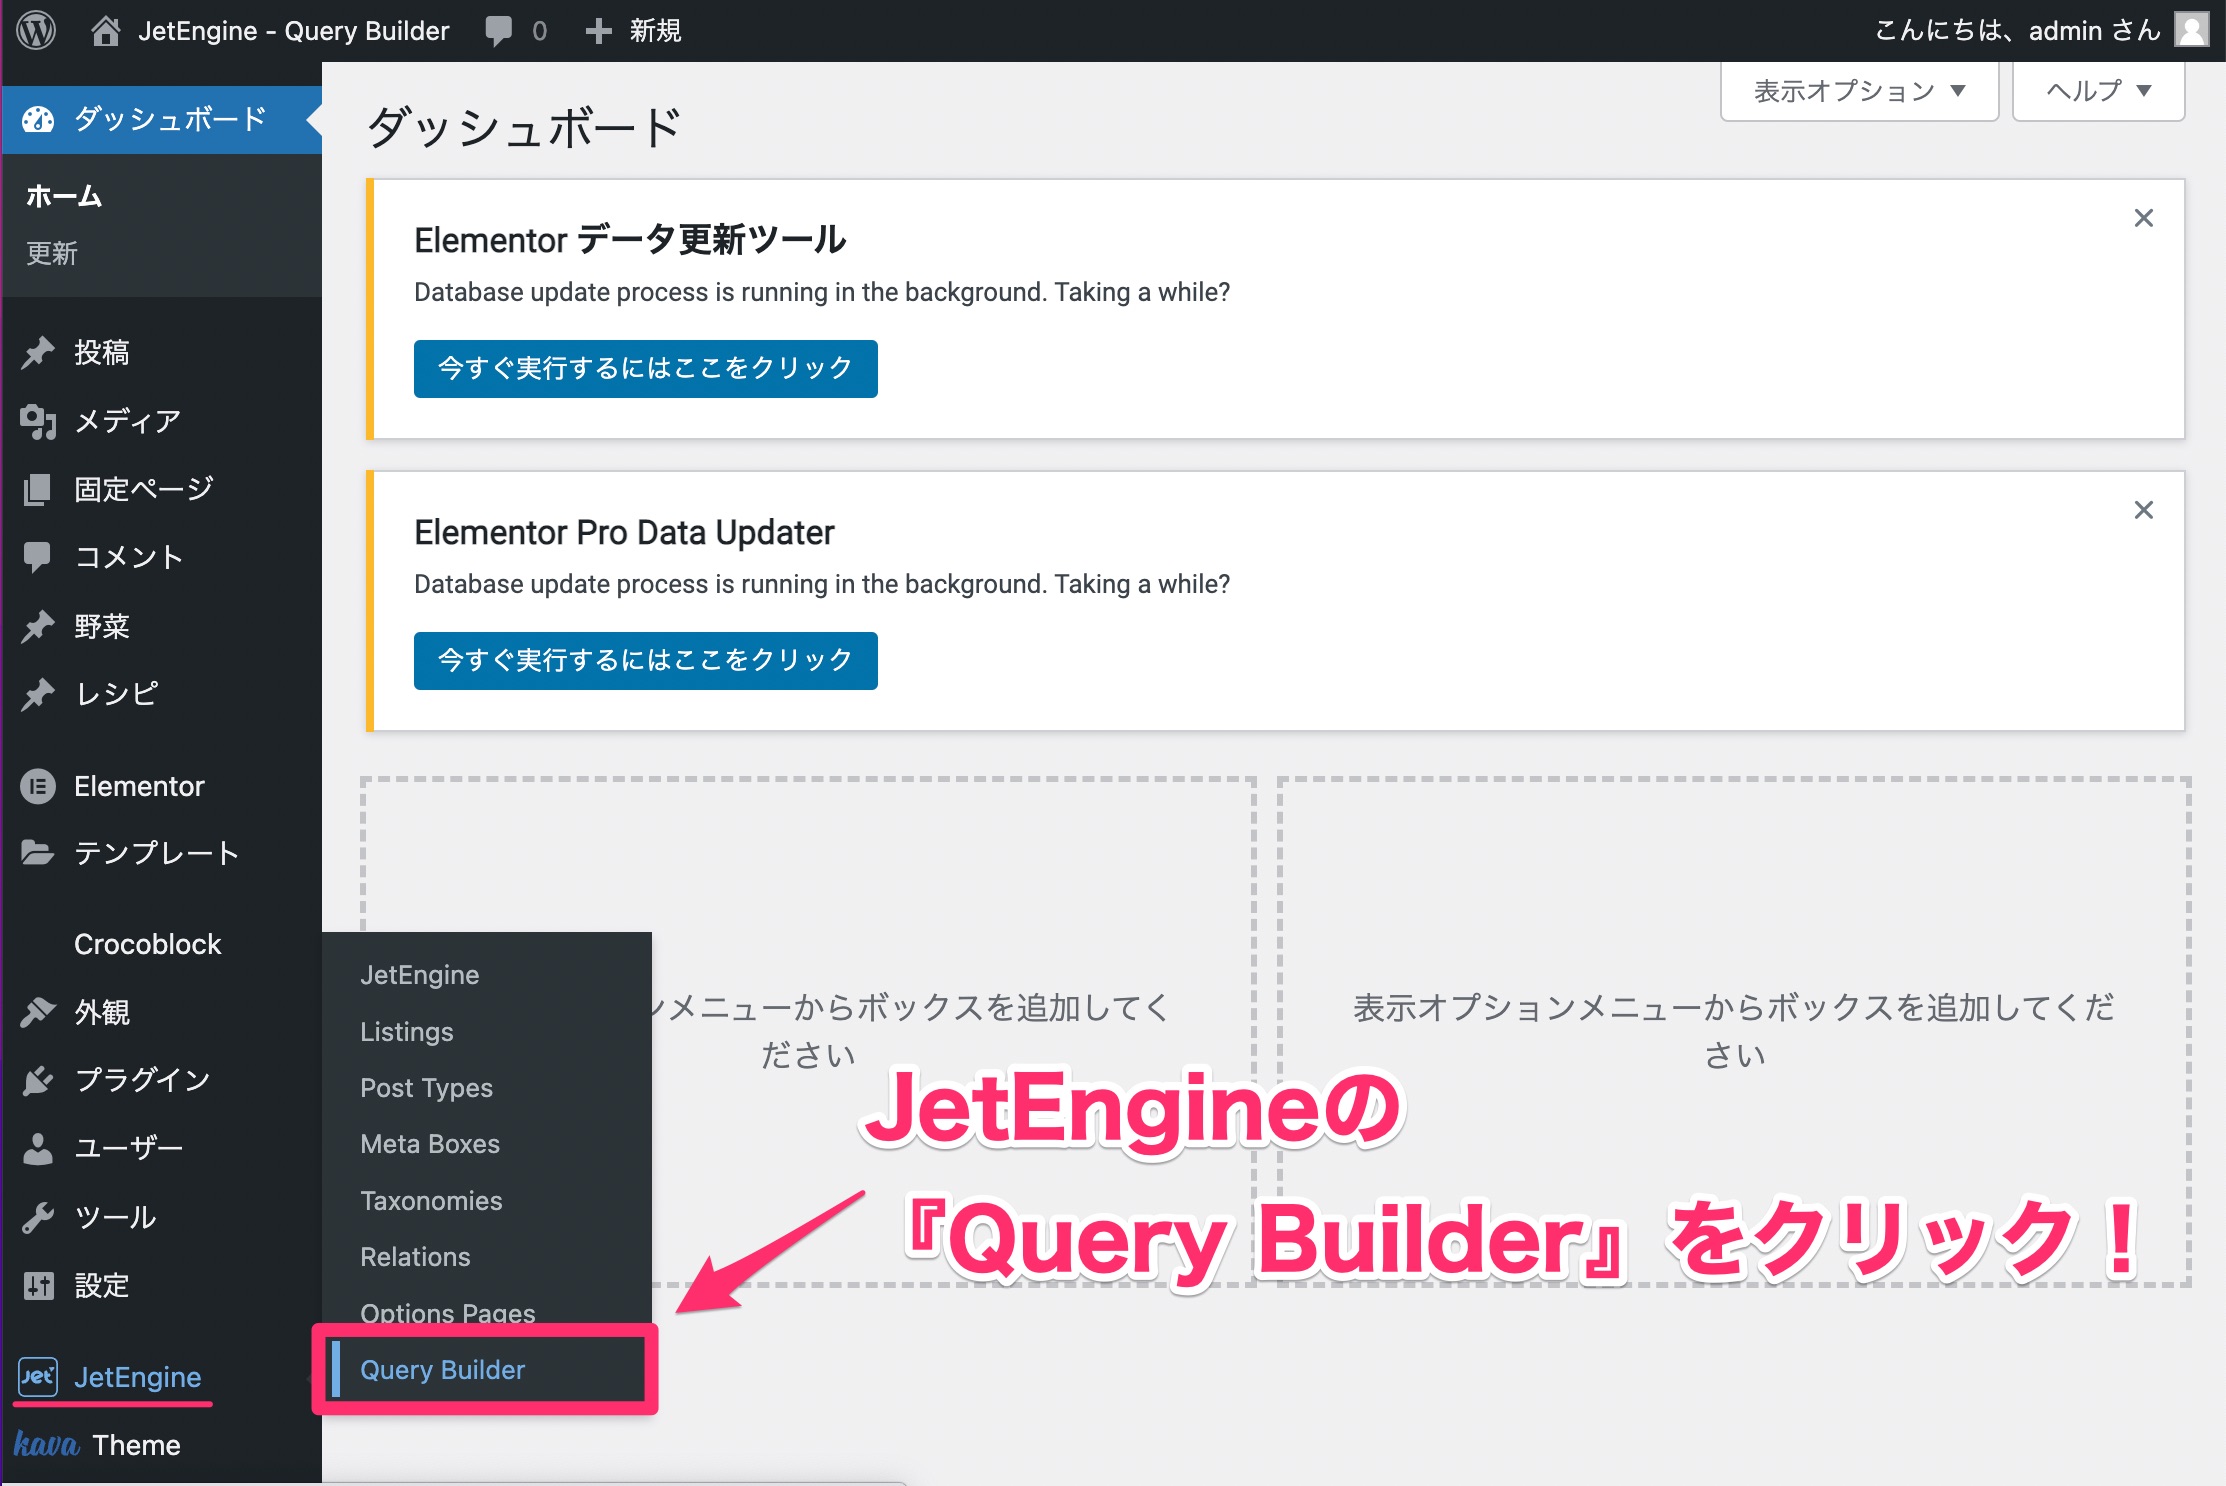 JetEngineの『Query Builder』をクリック